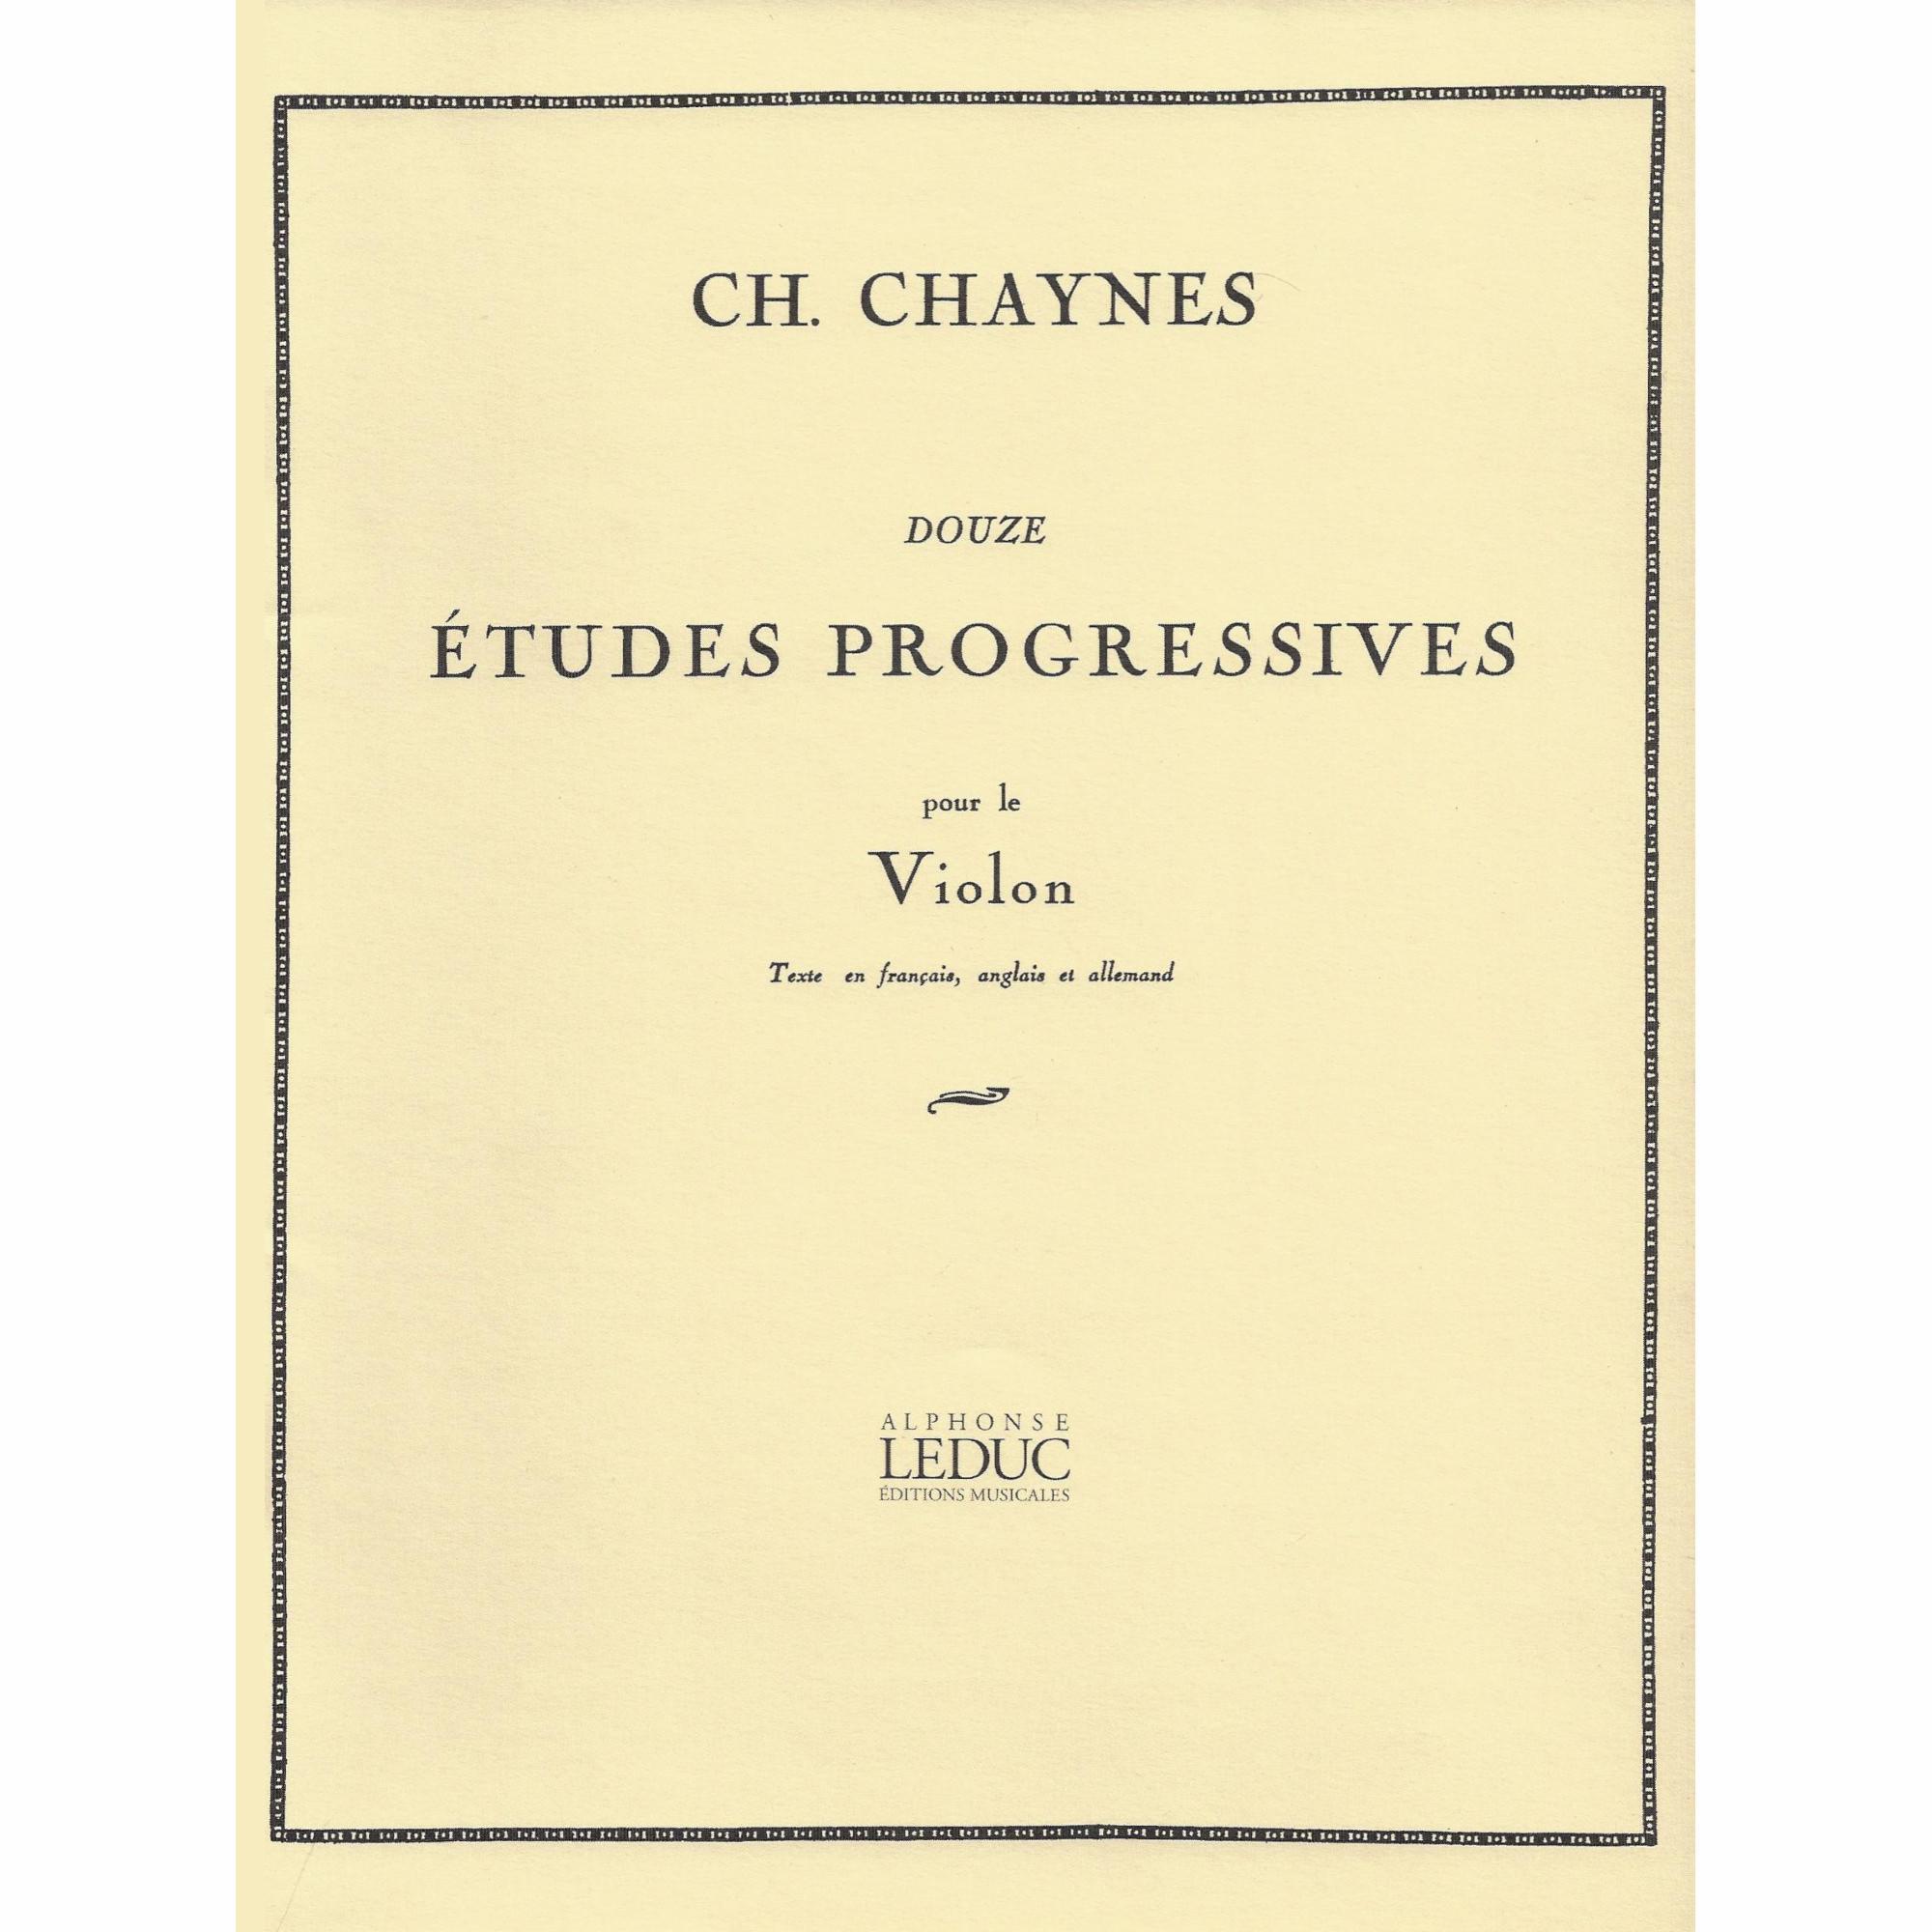 Chaynes -- 12 Progressive Etudes for Violin